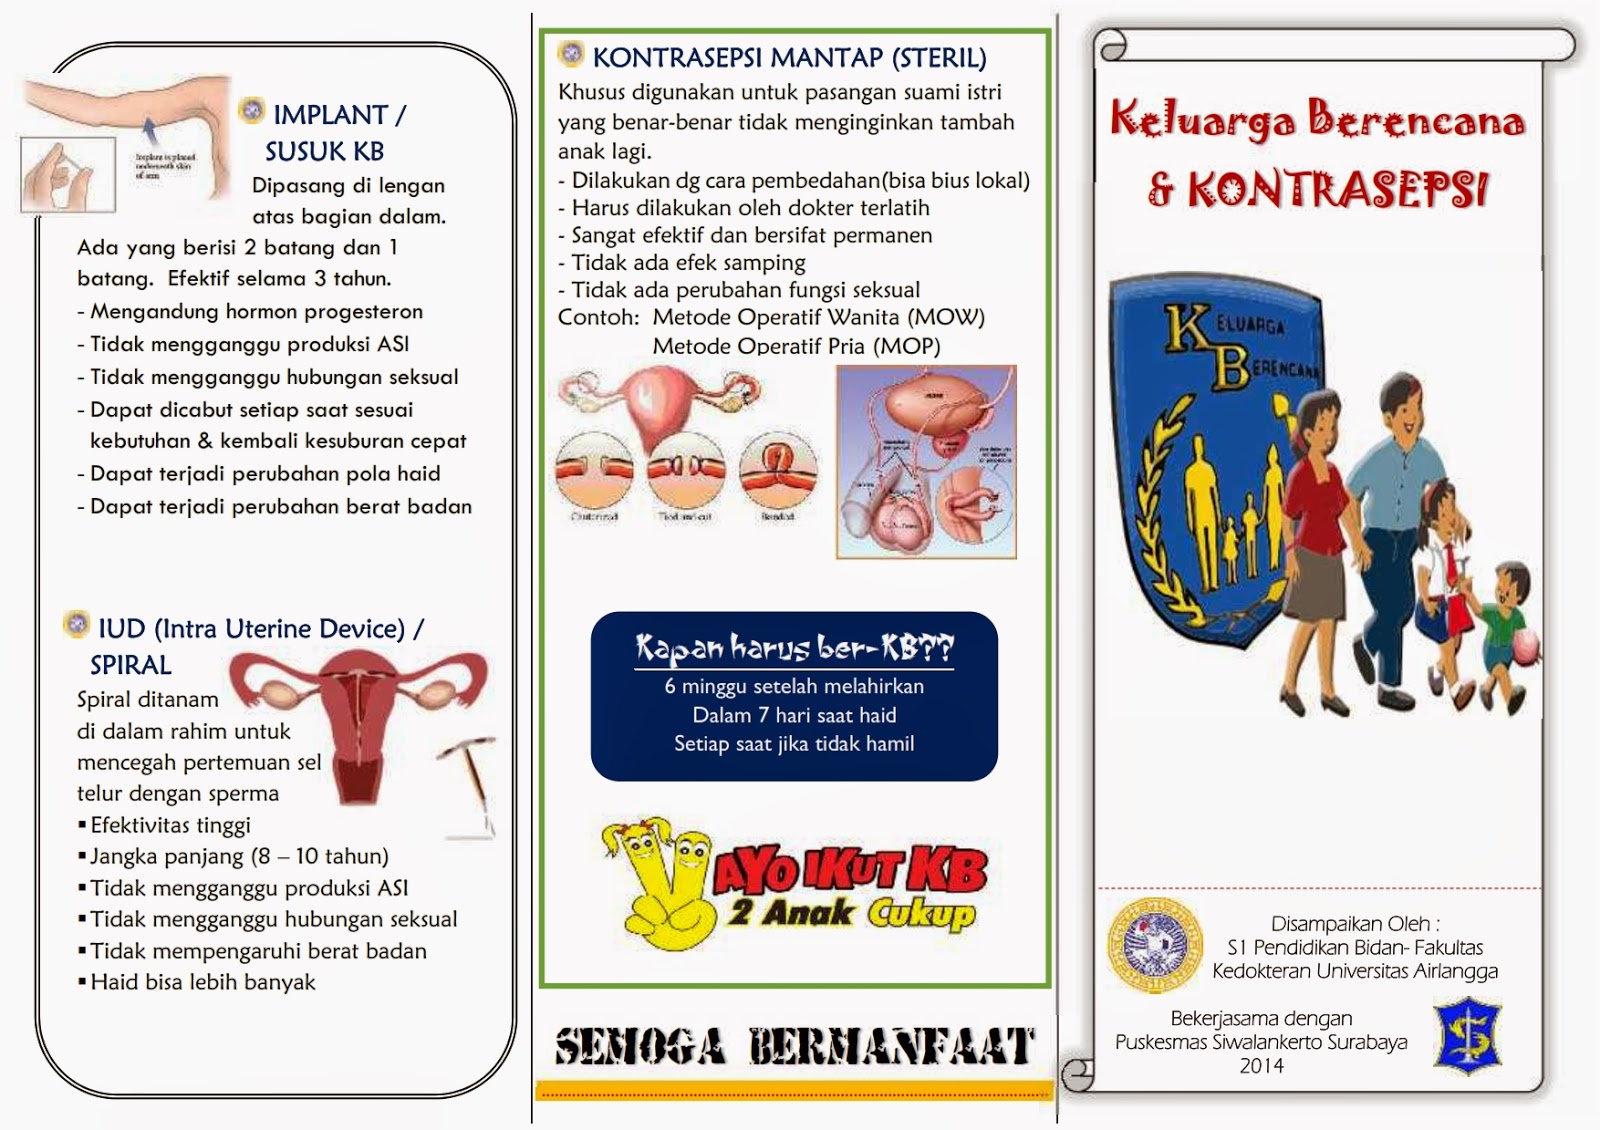 Kumpulan Materi Kebidanan: Leaflet Keluarga Berencana (KB)